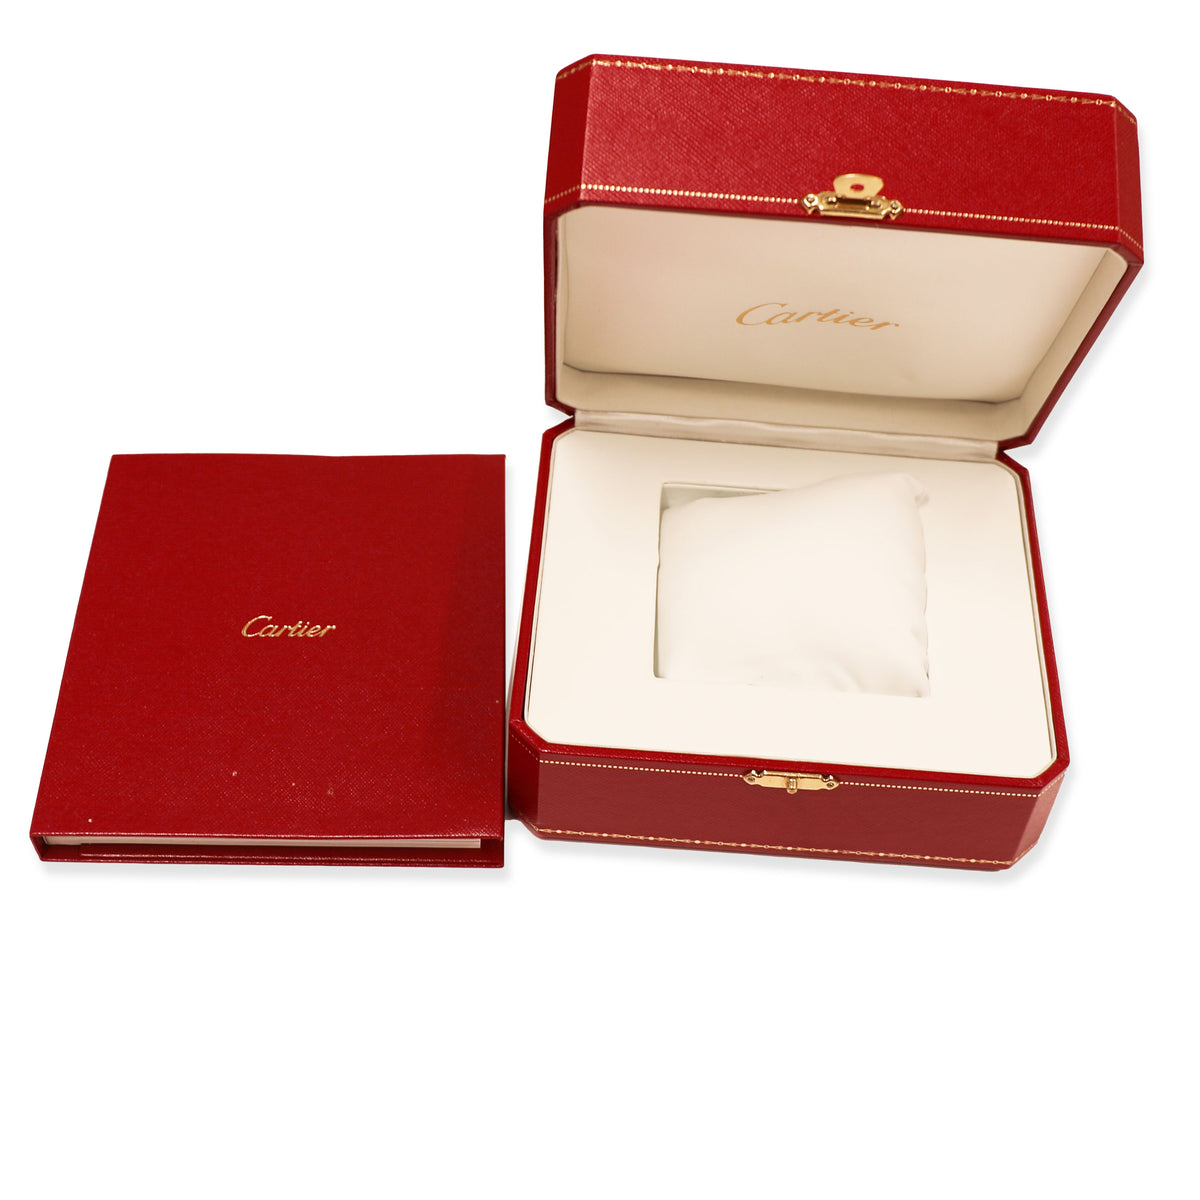 Cartier Tortue W1556366 Women's Watch in 18kt Rose Gold